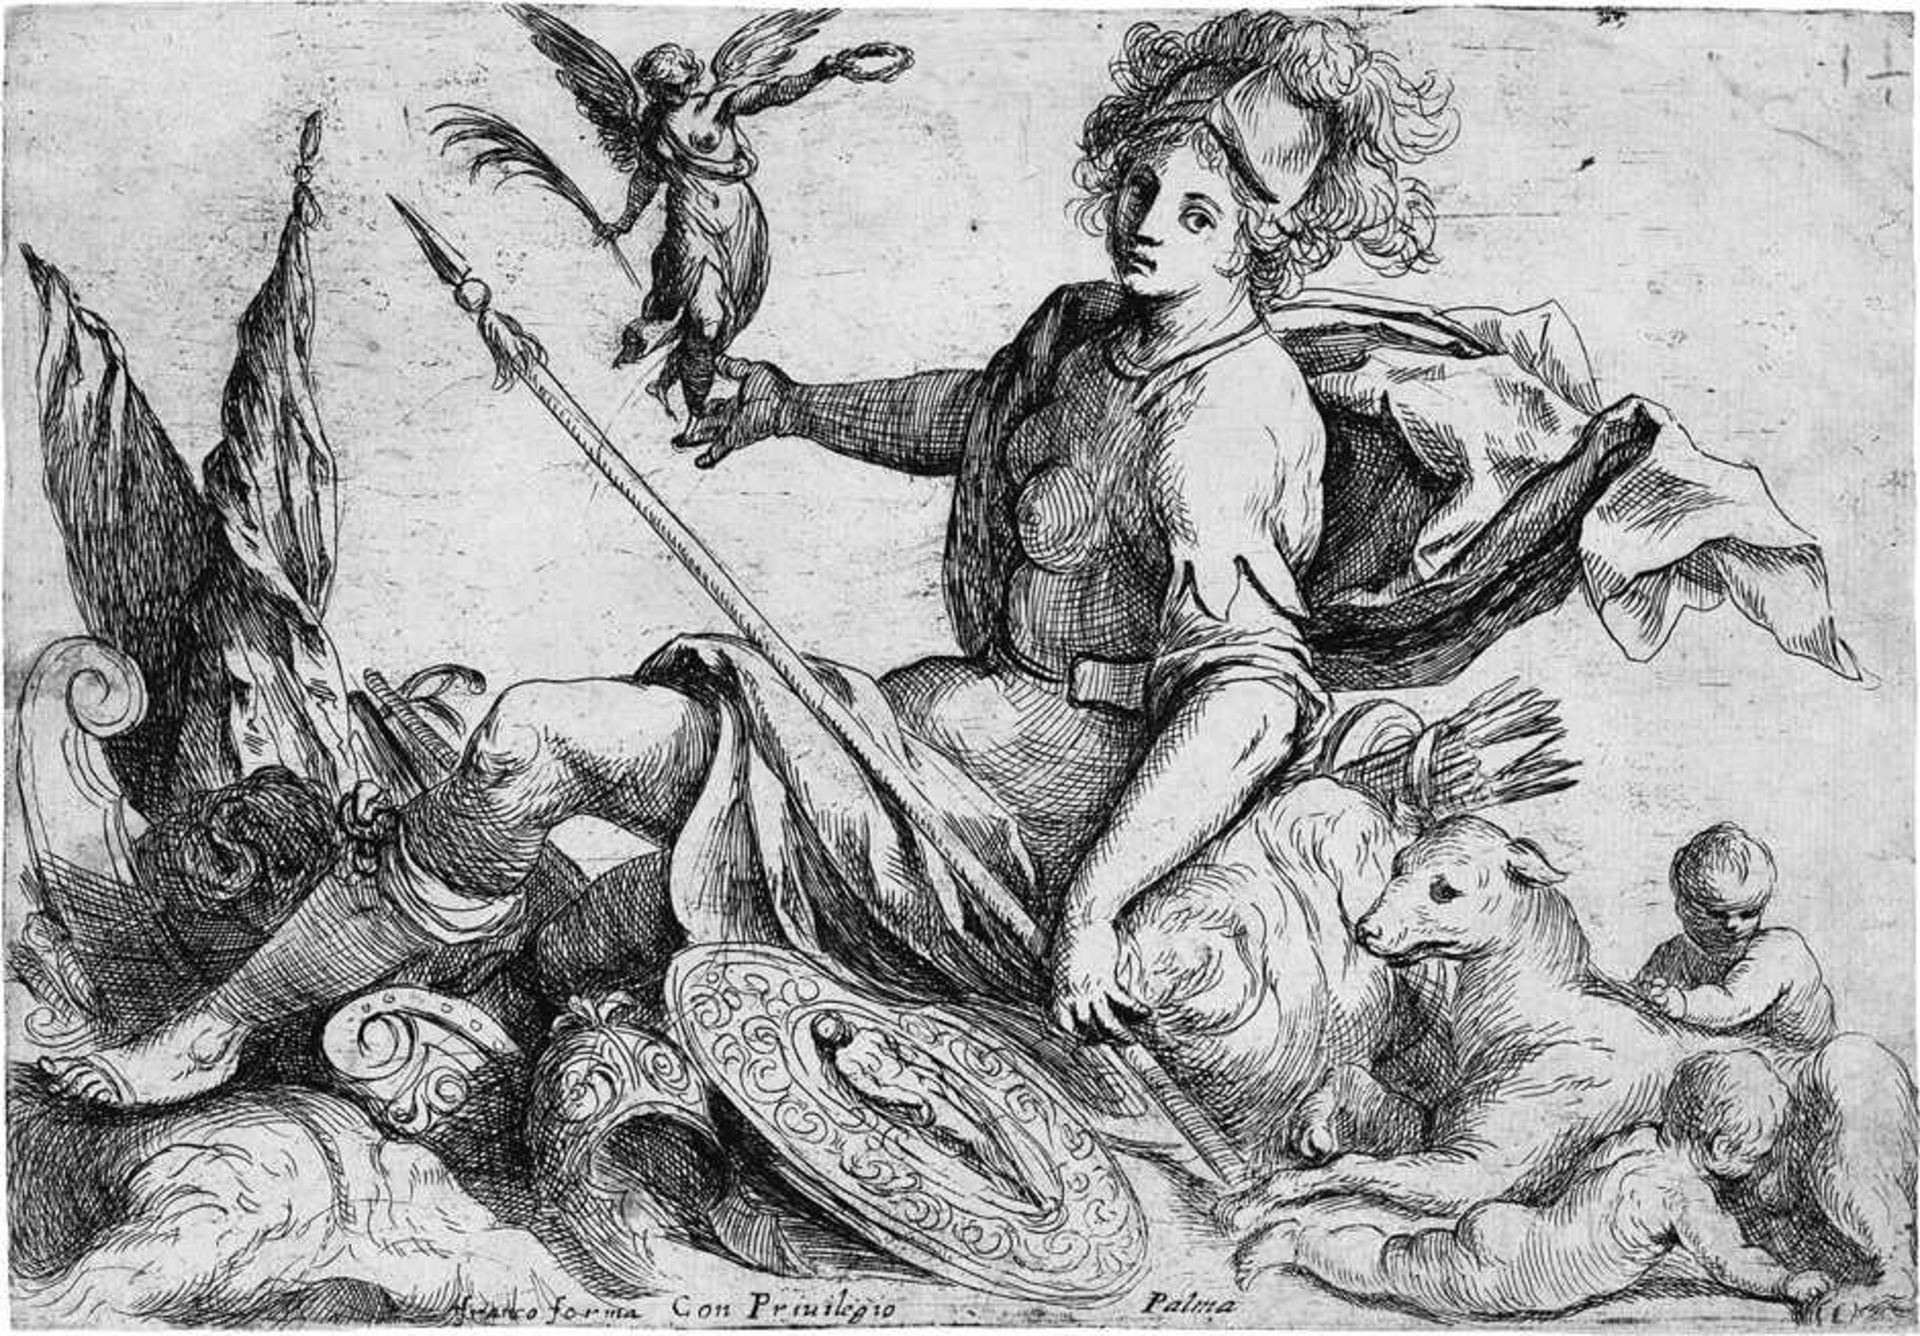 Palma, Jacopo: Die Schutzgöttin RomsDie Schutzgöttin Roms. Radierung. 16,7 x 24,1 cm. B. XVI, S.